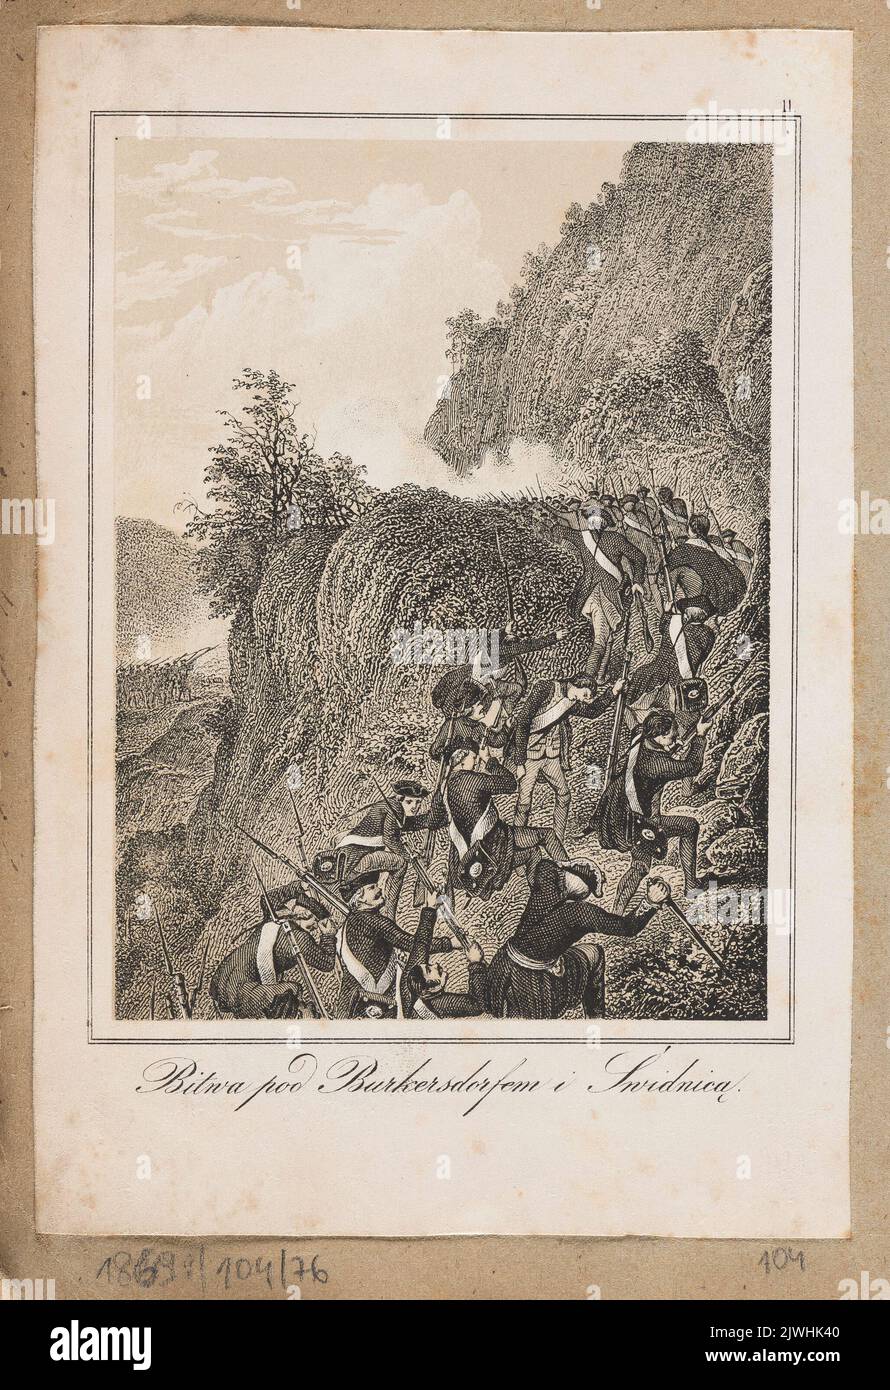 The Battle of Burkersdorf (Burkatów) and Świdnica. Orgelbrand, Samuel (Warszawa ; wydawnictwo, drukarnia ; fl. 1836-1919), merchant employer, Koenig (König) Fr., graphic artist Stock Photo